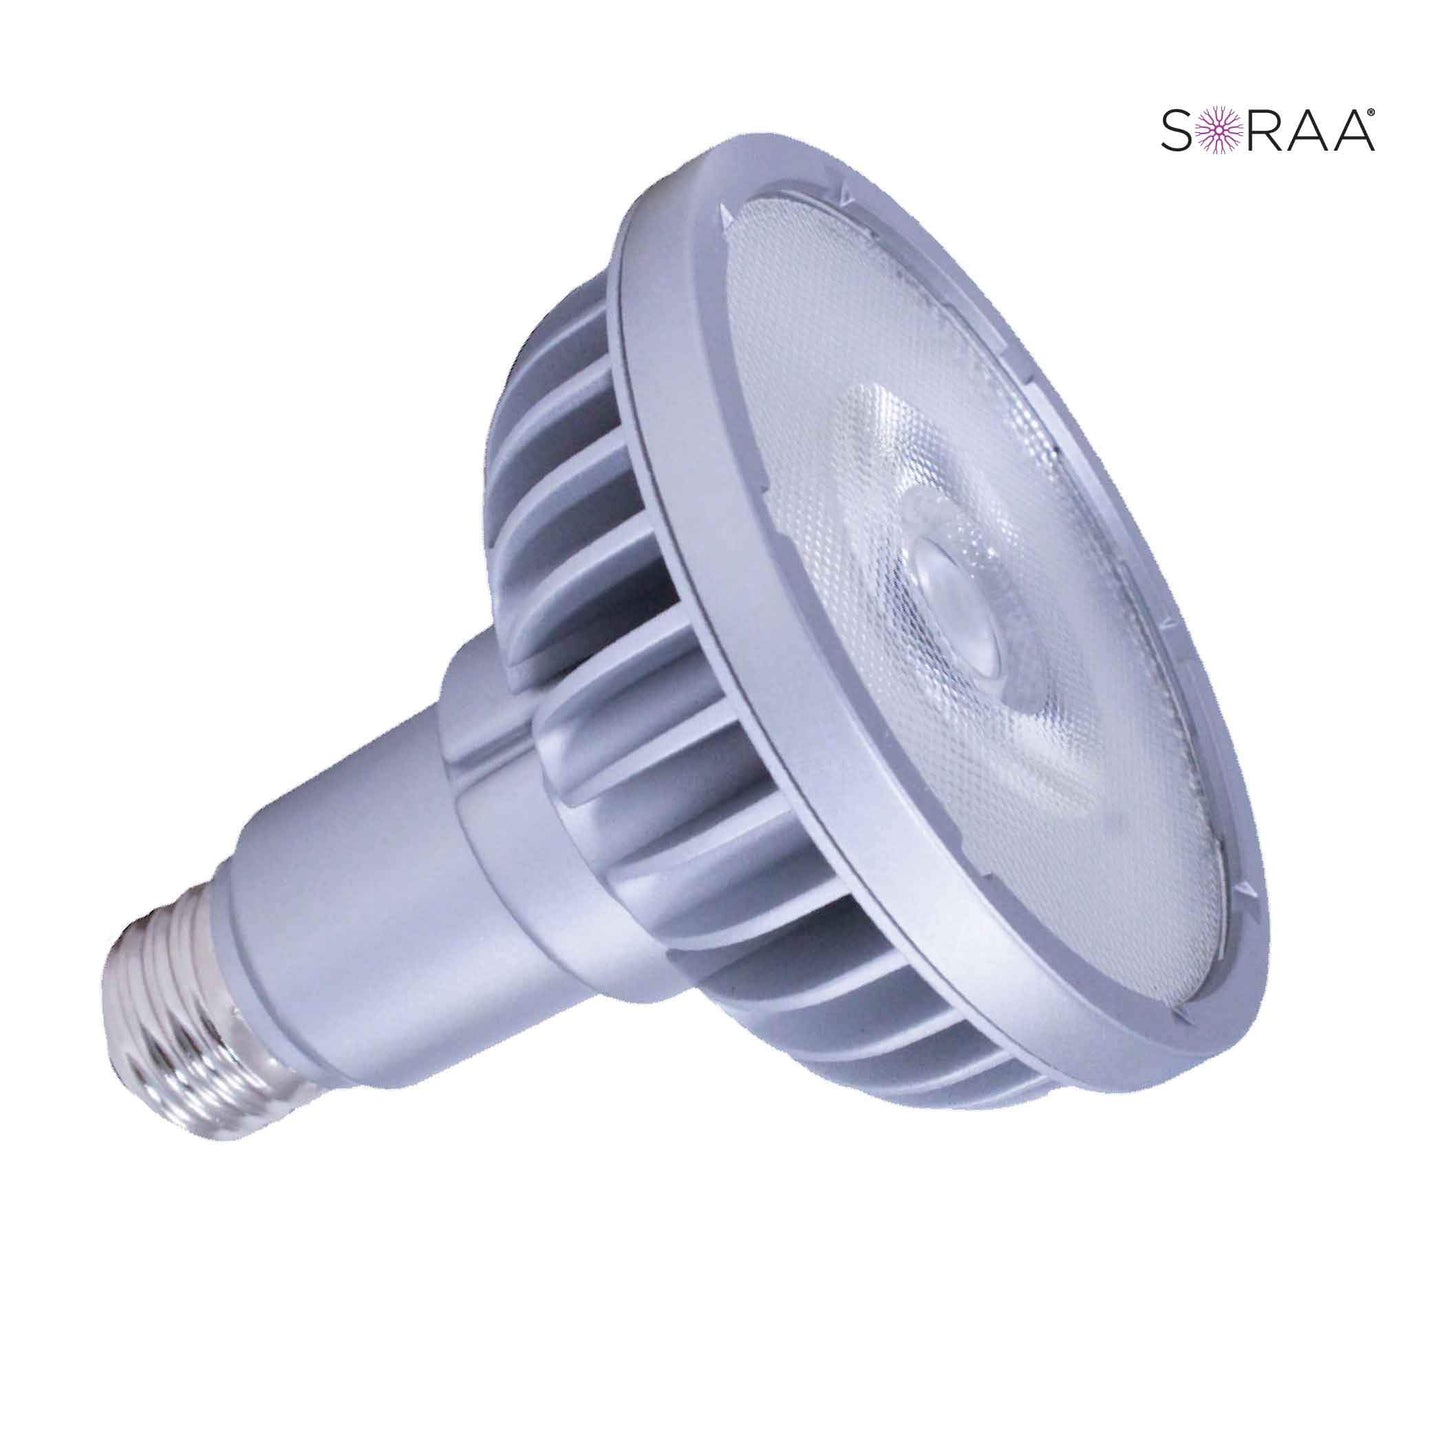 SORAA LED PAR30LN MEDIUM SCREW (E26) 18.5W DIMMABLE LIGHT BULB 2700K/WARM WHITE 120W HALOGEN EQUIVALENT 1PK (777741)